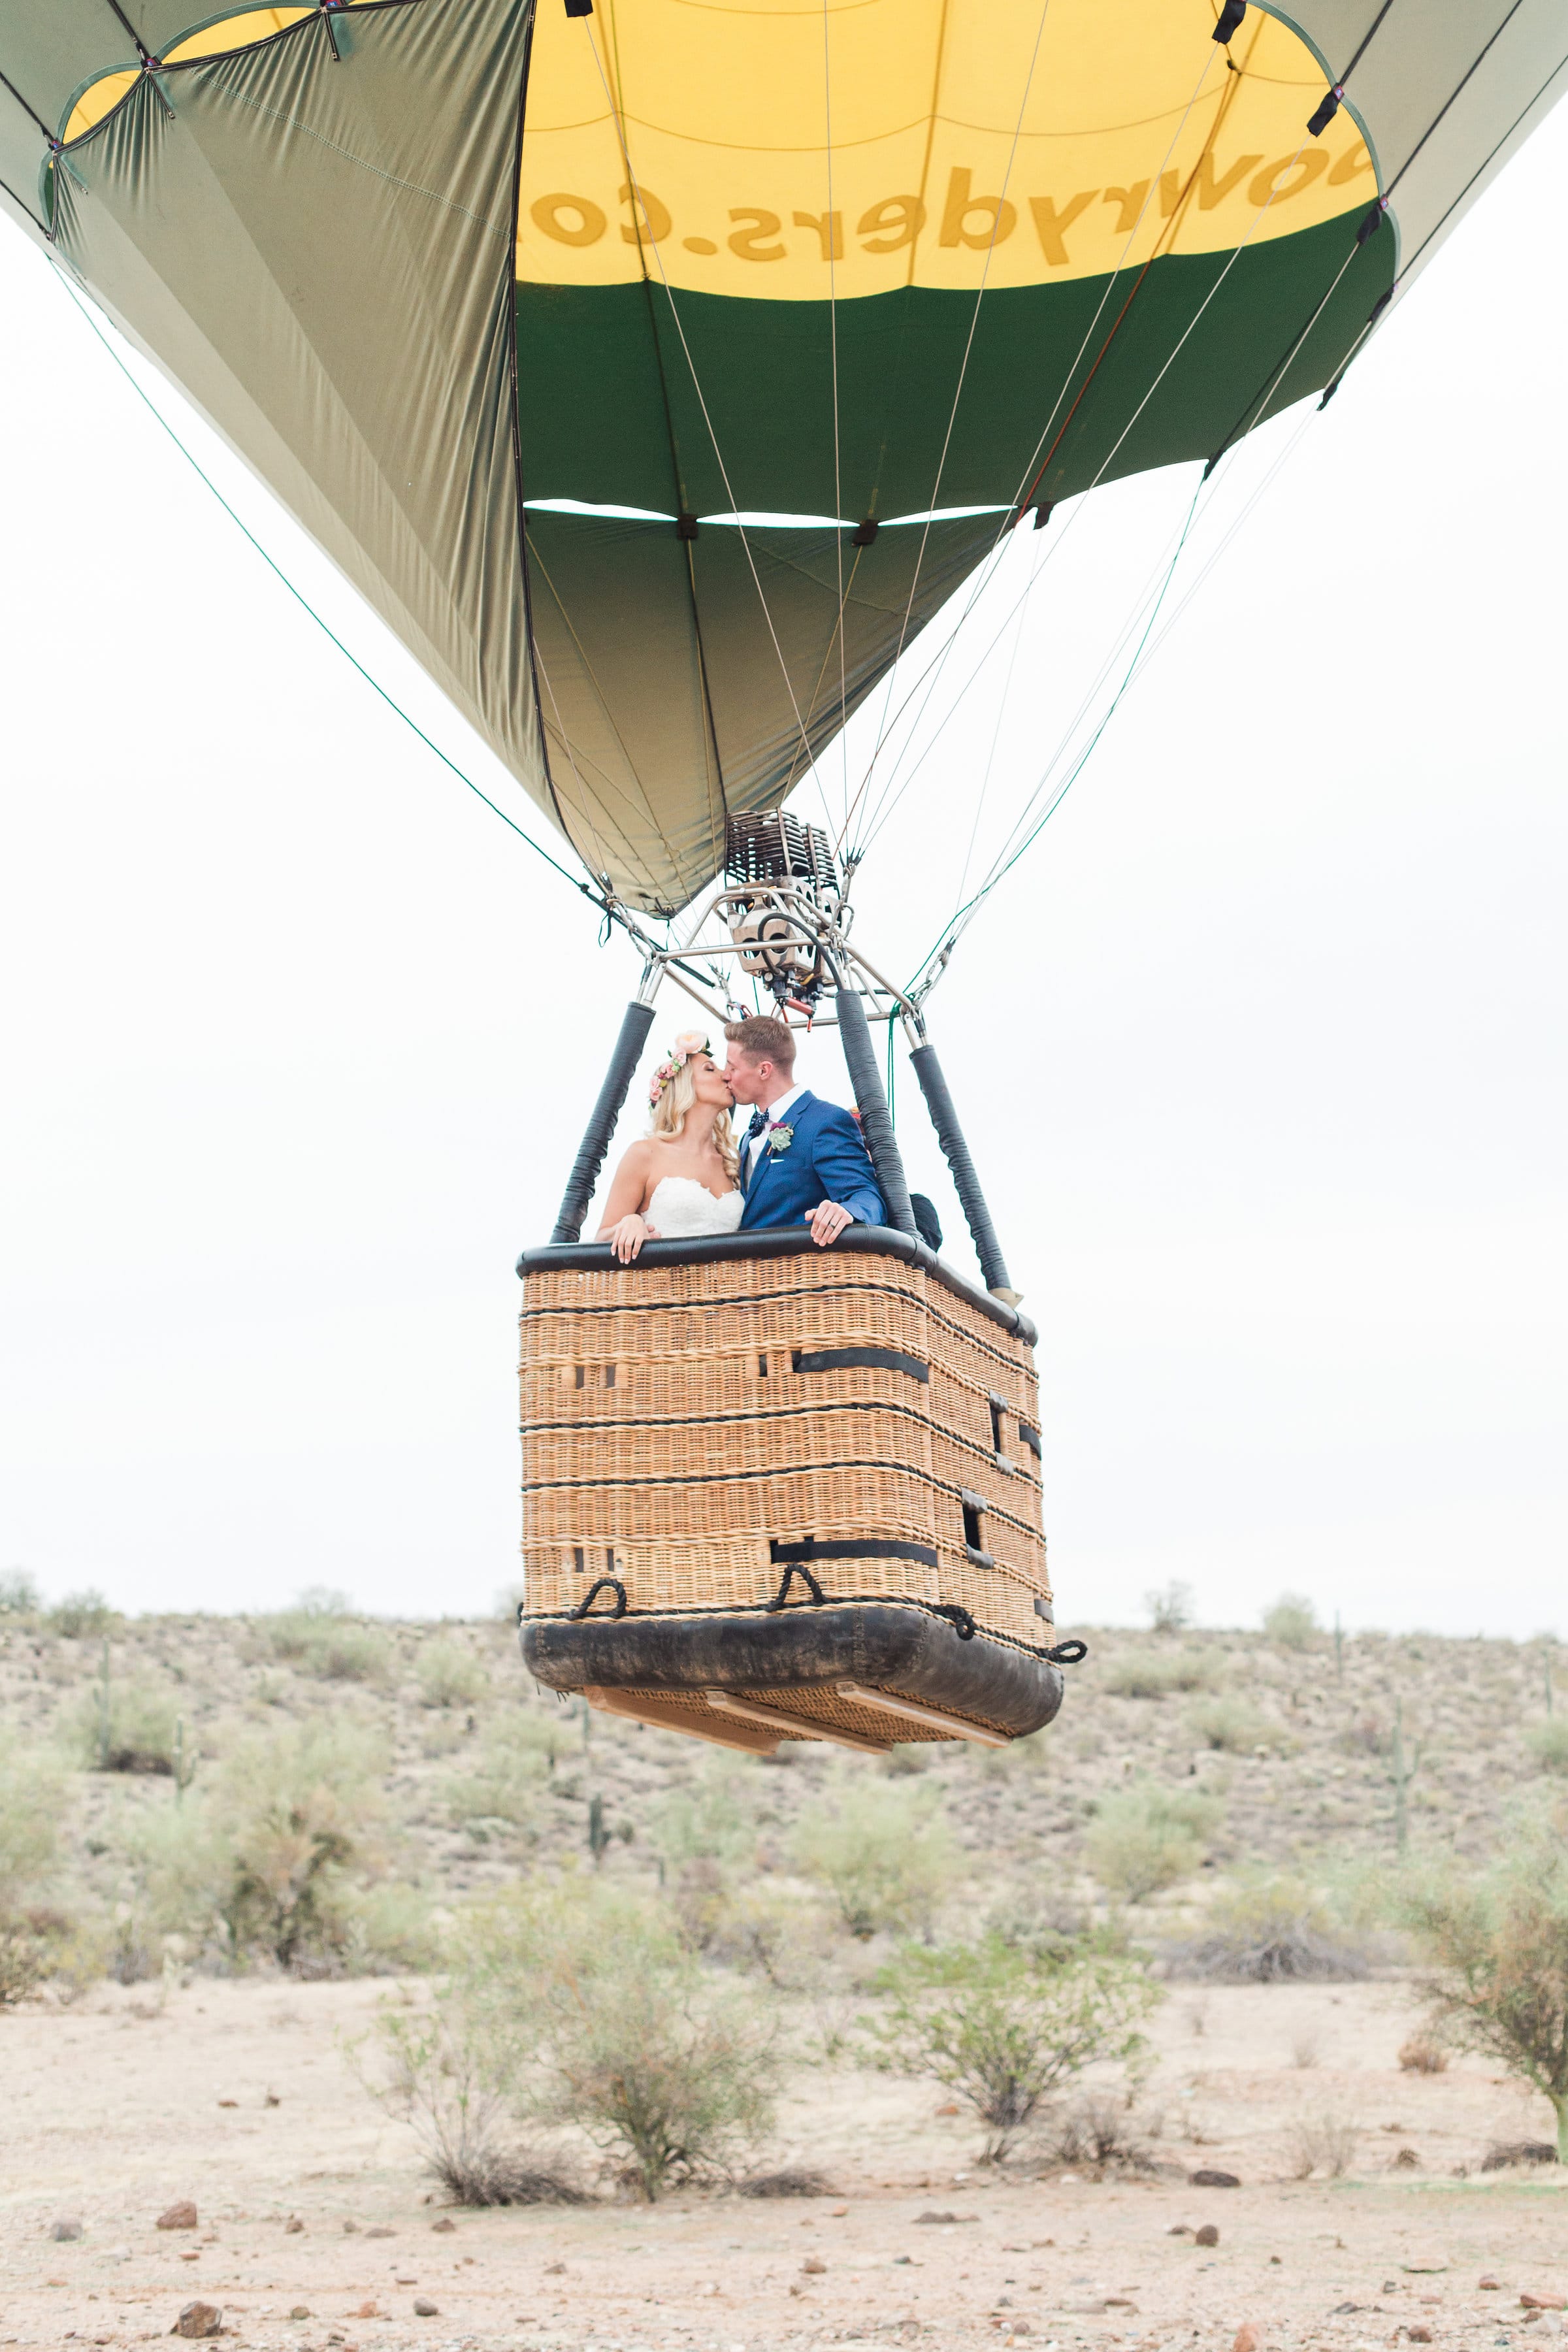 We’re Over the Moon for this Hot Air Balloon Destination Wedding Idea  - Maggie Sottero Bride Keisha